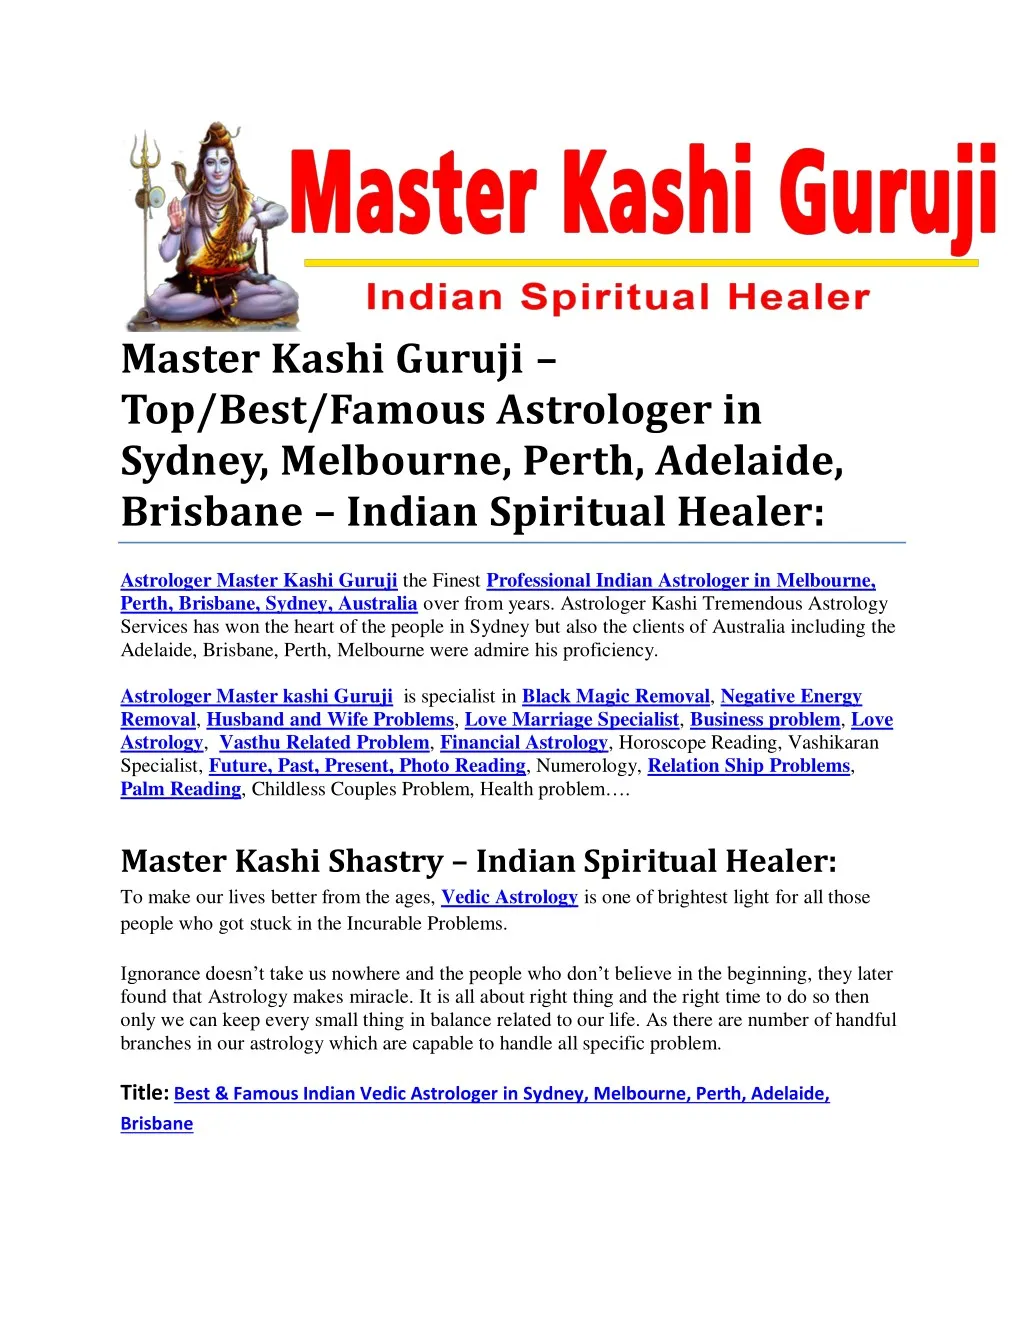 master kashi guruji top best famous astrologer